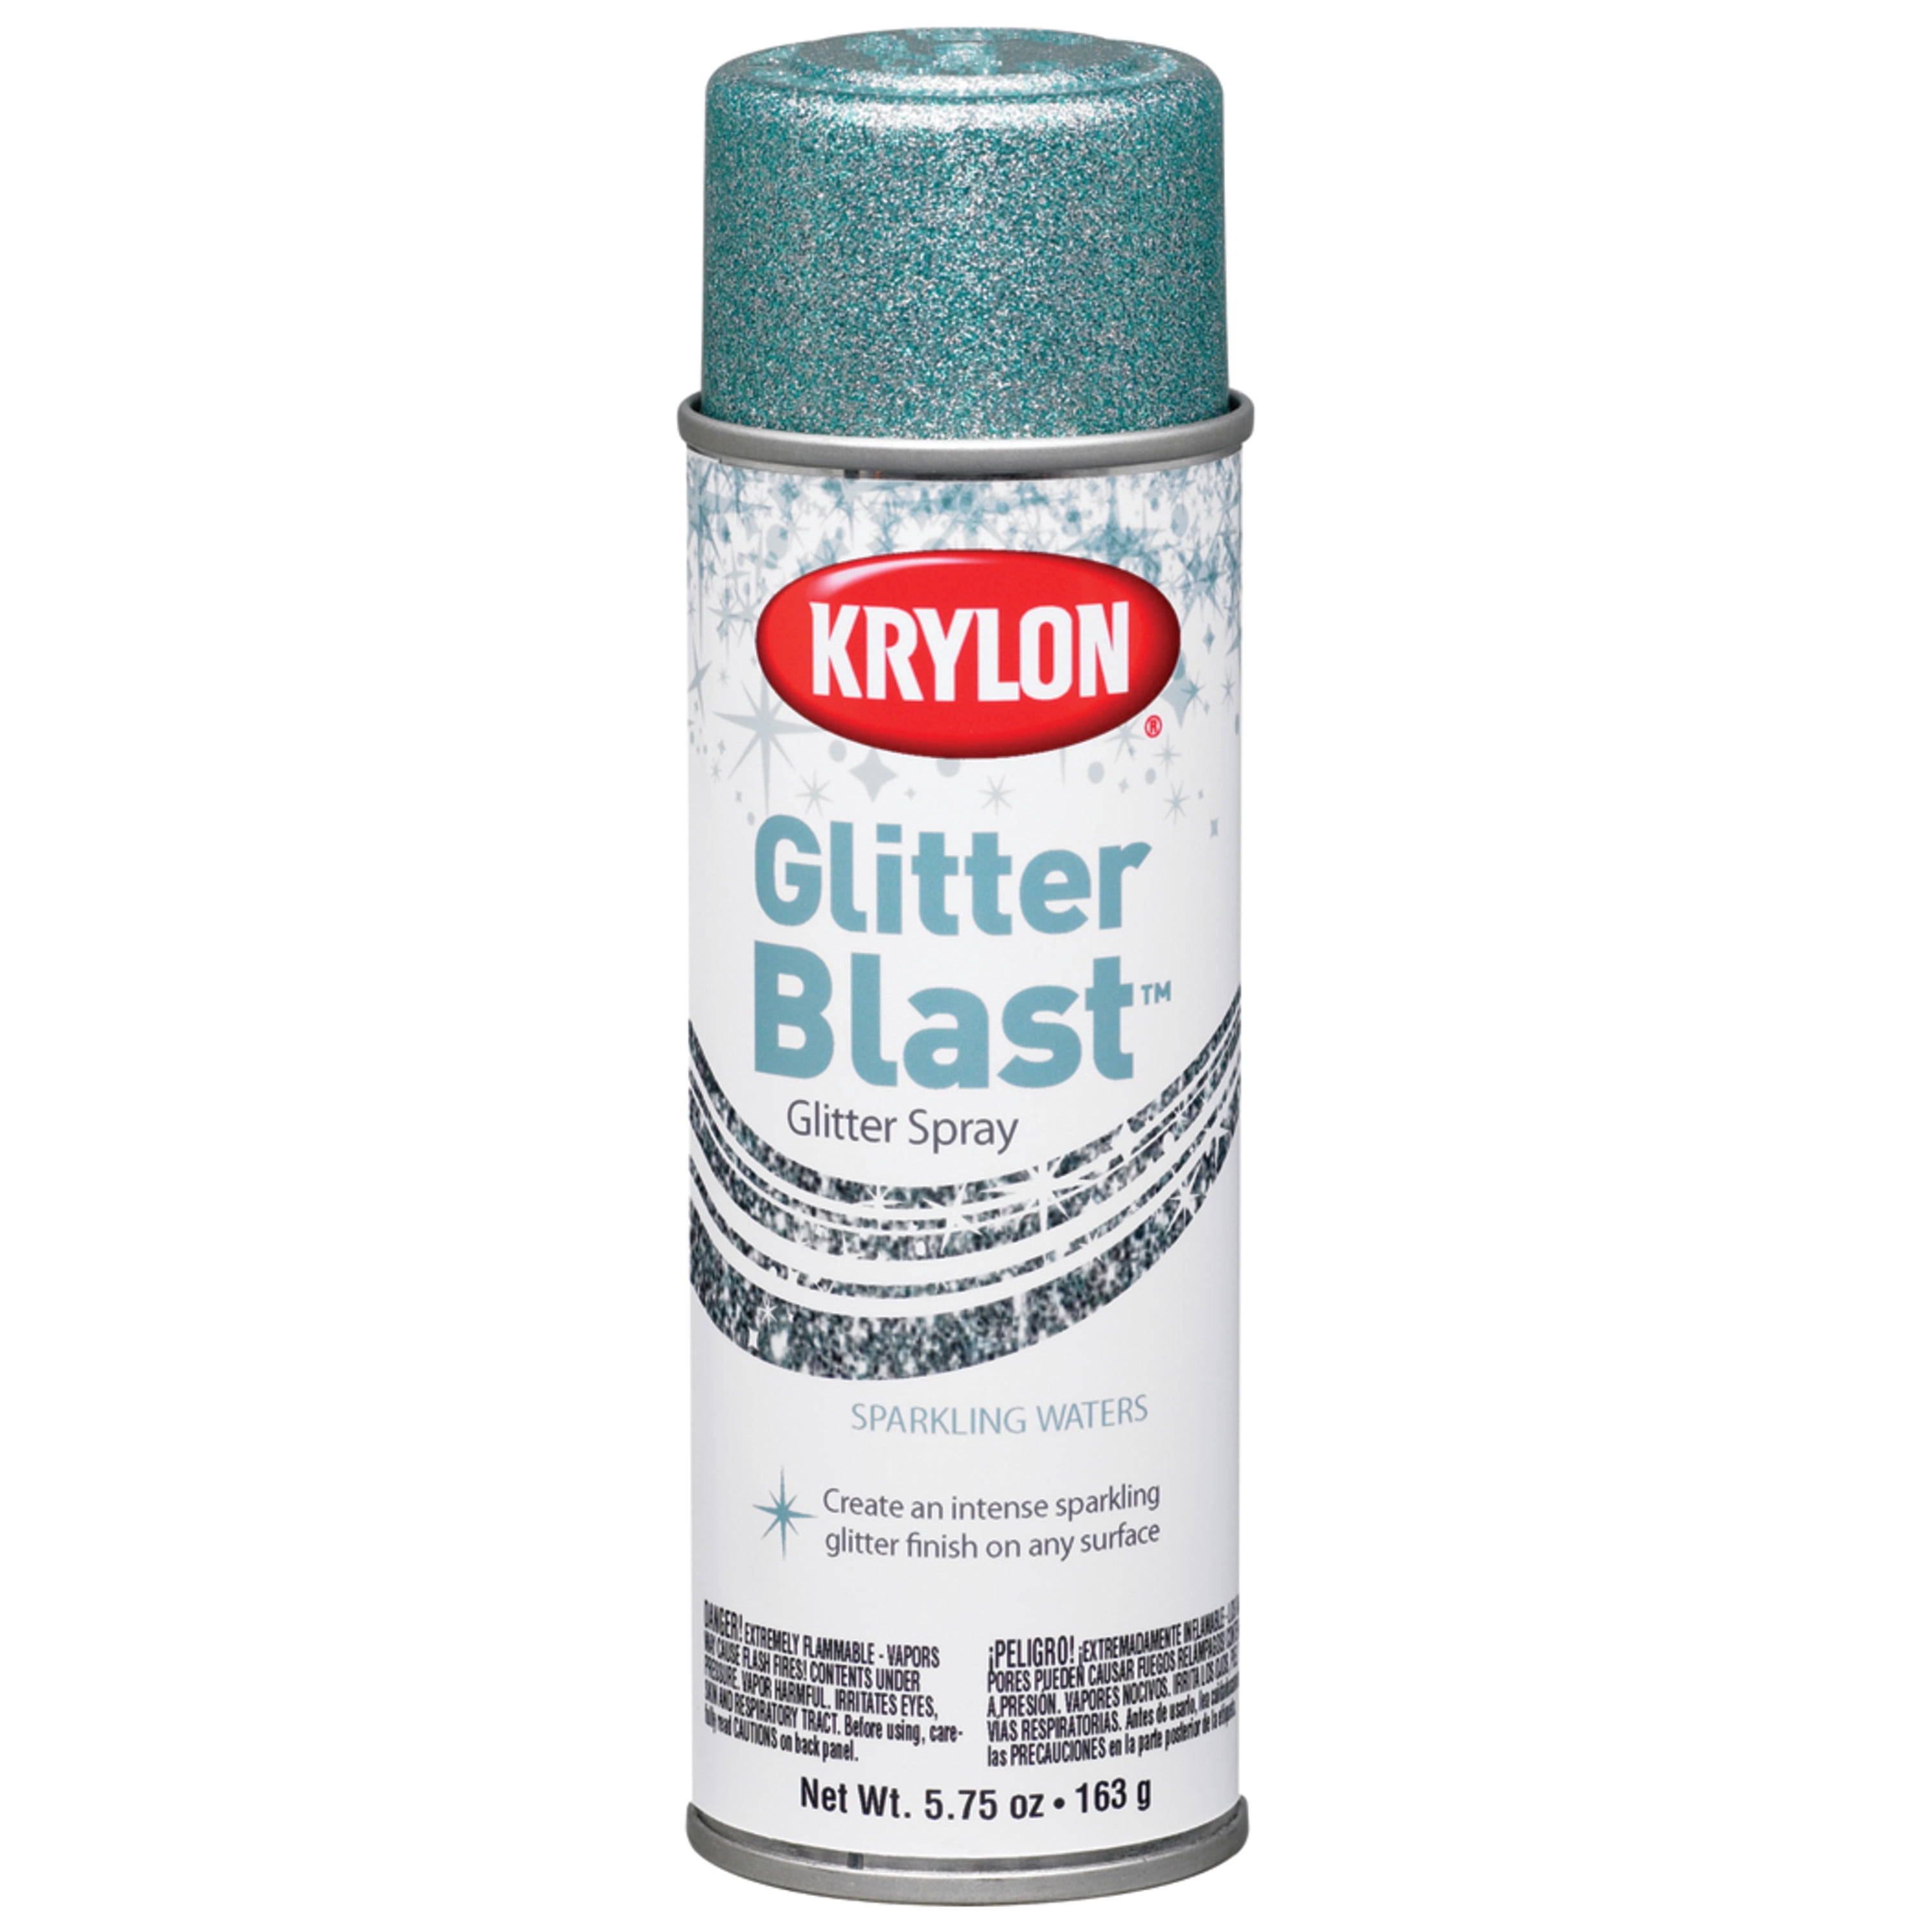 Krylon Glitter Blast Glitter Spray Paint, 5.7 oz., Sparkling Waters 